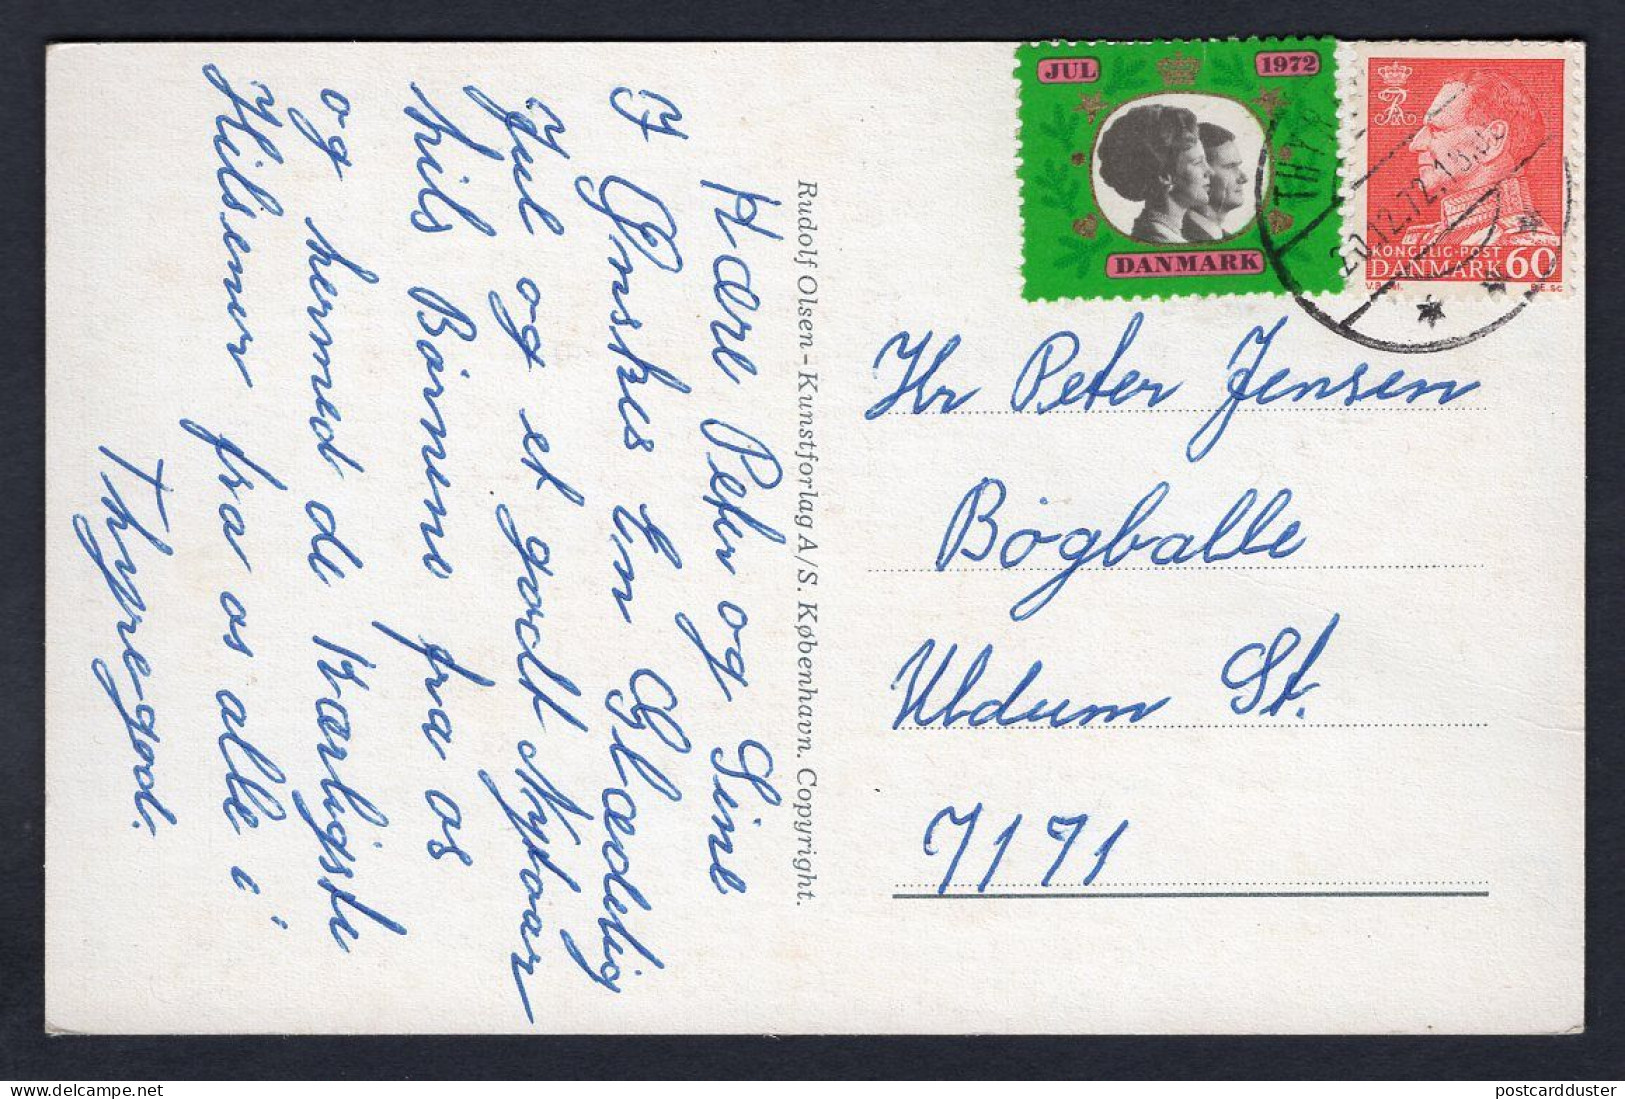 DENMARK 1972 Christmas Royals Cinderella On Santa Claus Postcard (p2132) - Lettres & Documents